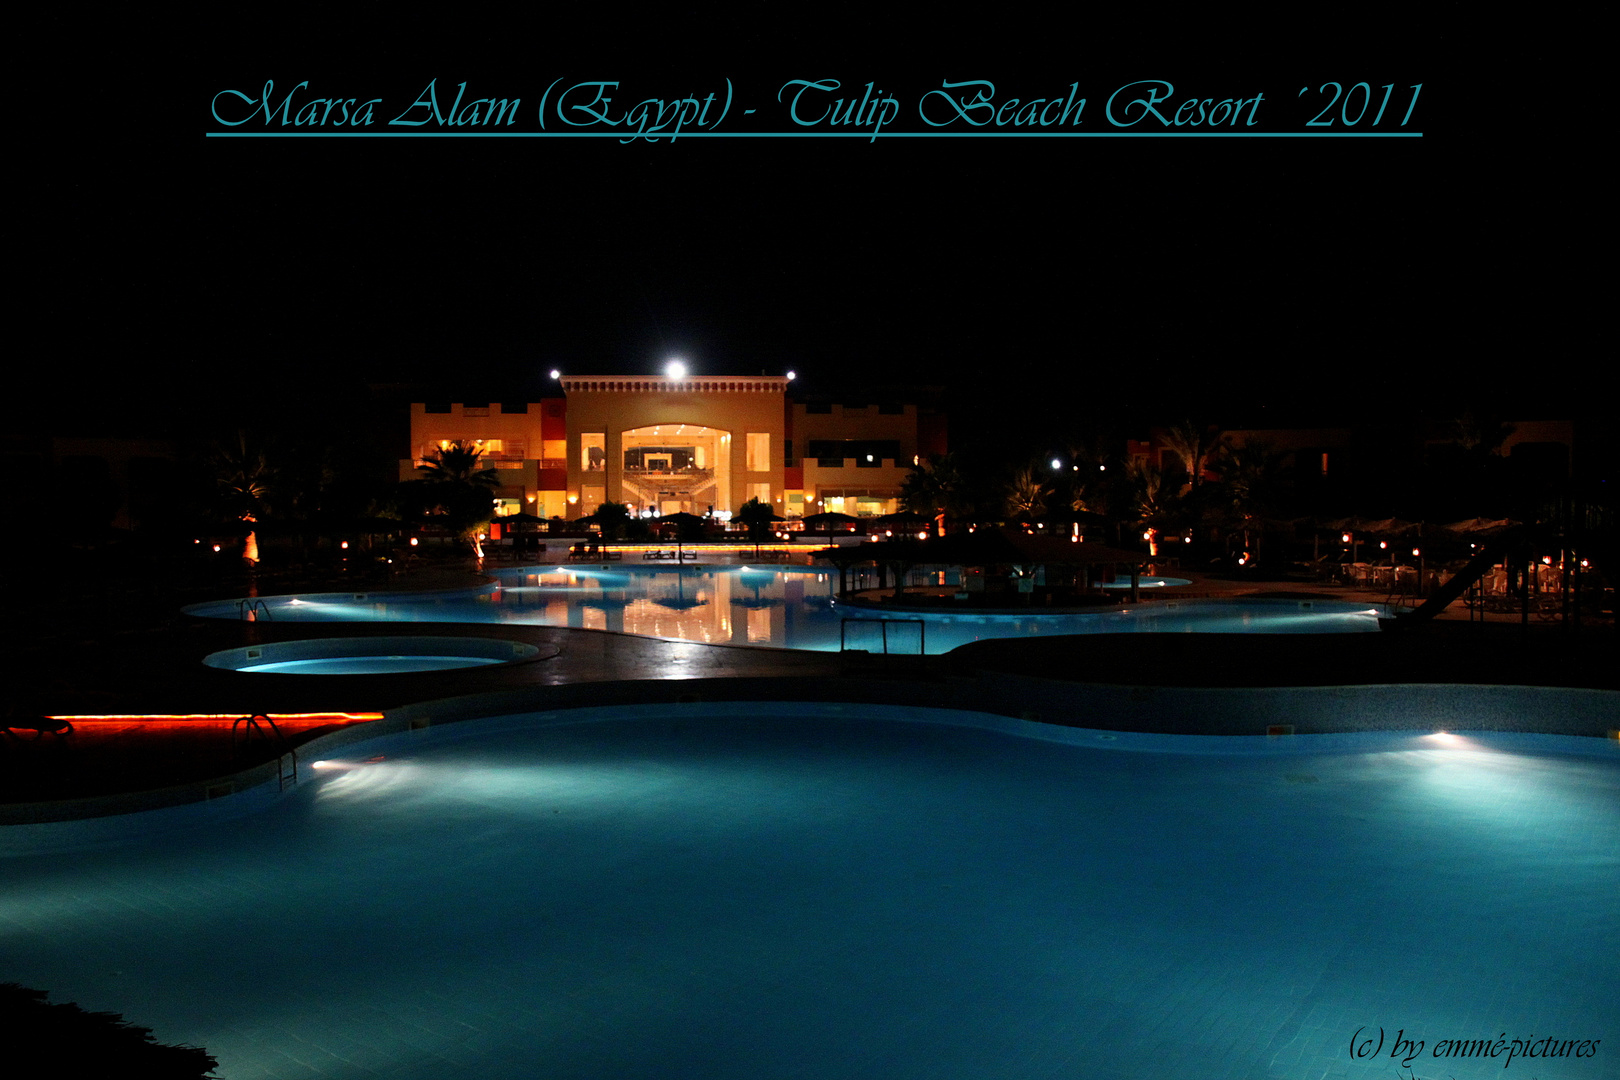 Marsa Alam (Egypt) - Tulip Beach Resort